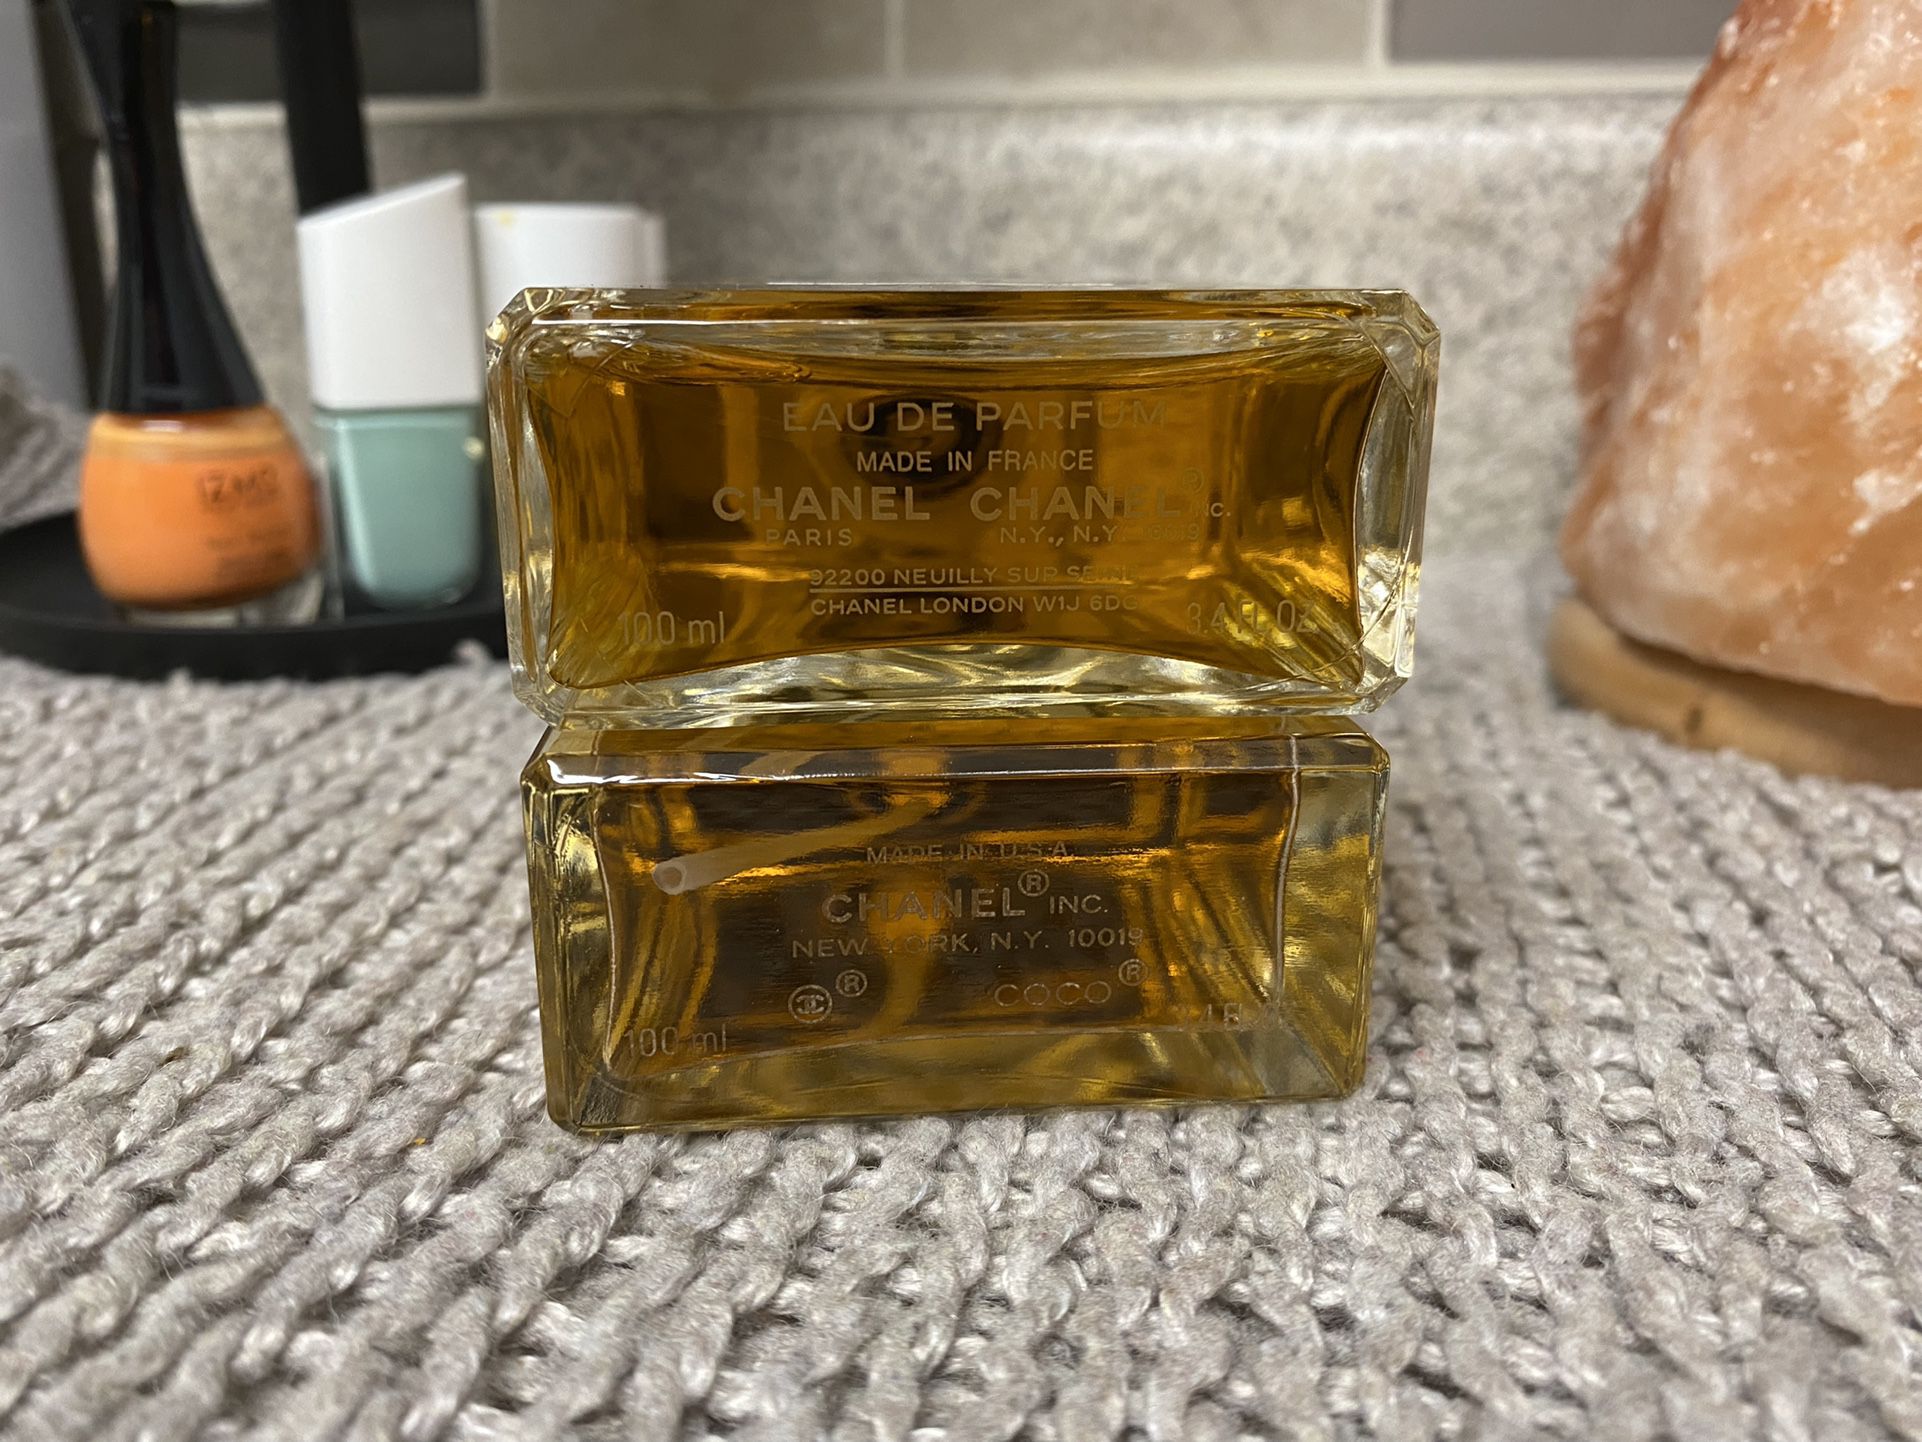 Coco Chanel Parfum&Toilette 2pc Perfume Set | Women’s Fragrance for Sale in  Lawrenceville, GA - OfferUp